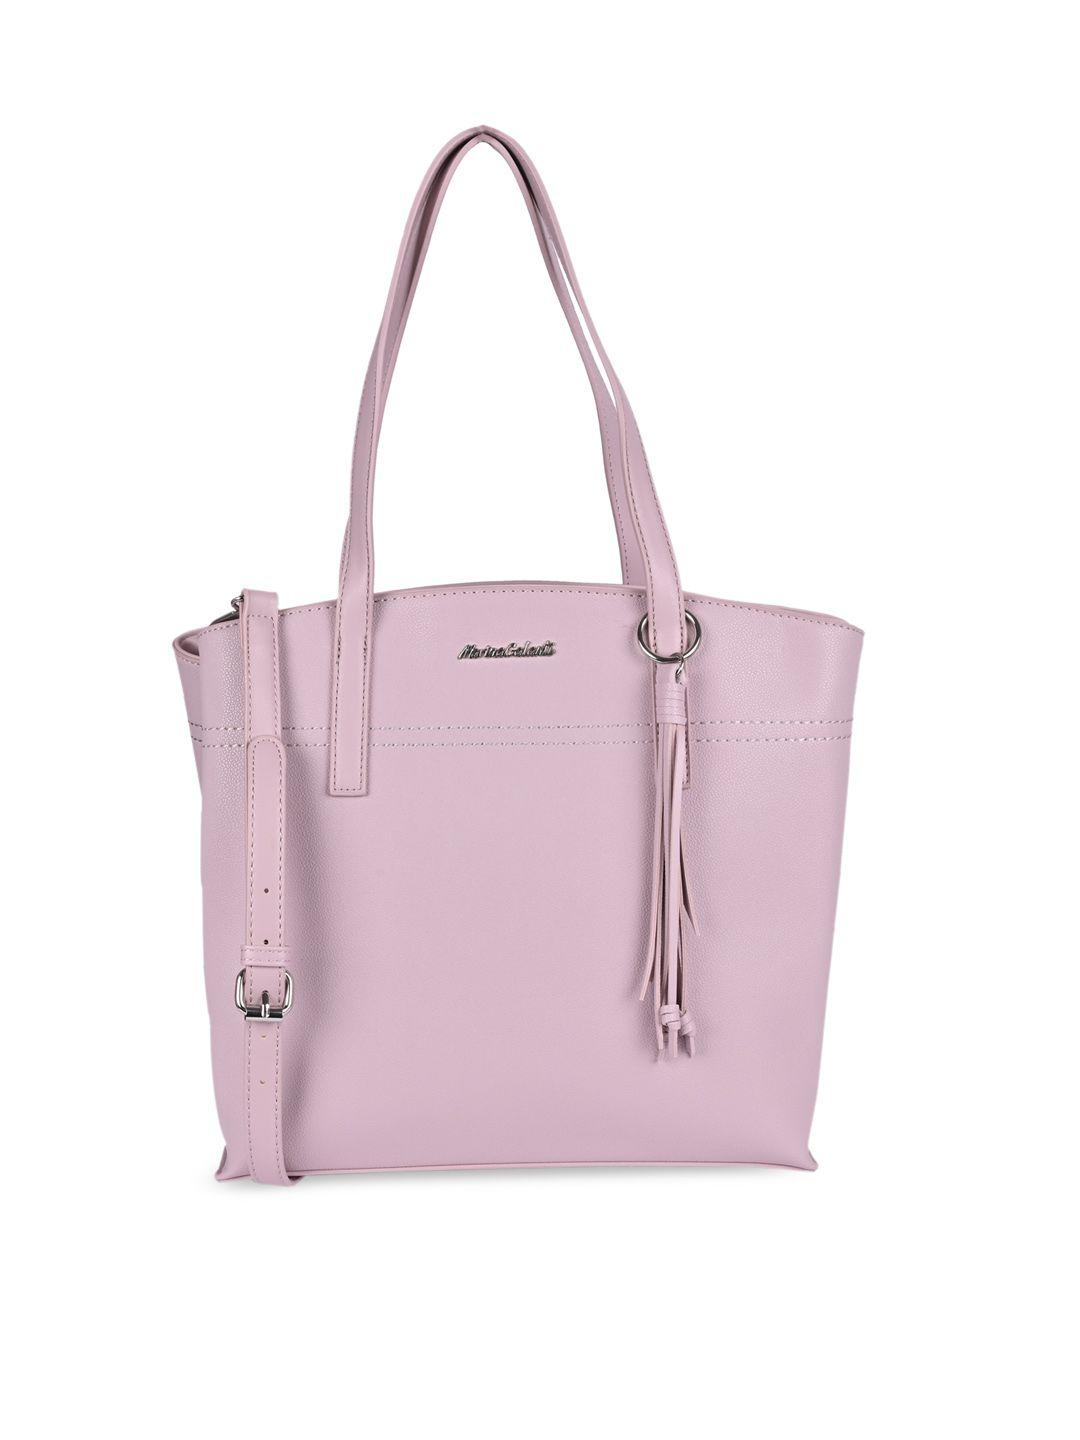 marina galanti pink structured shoulder bag with tasselled